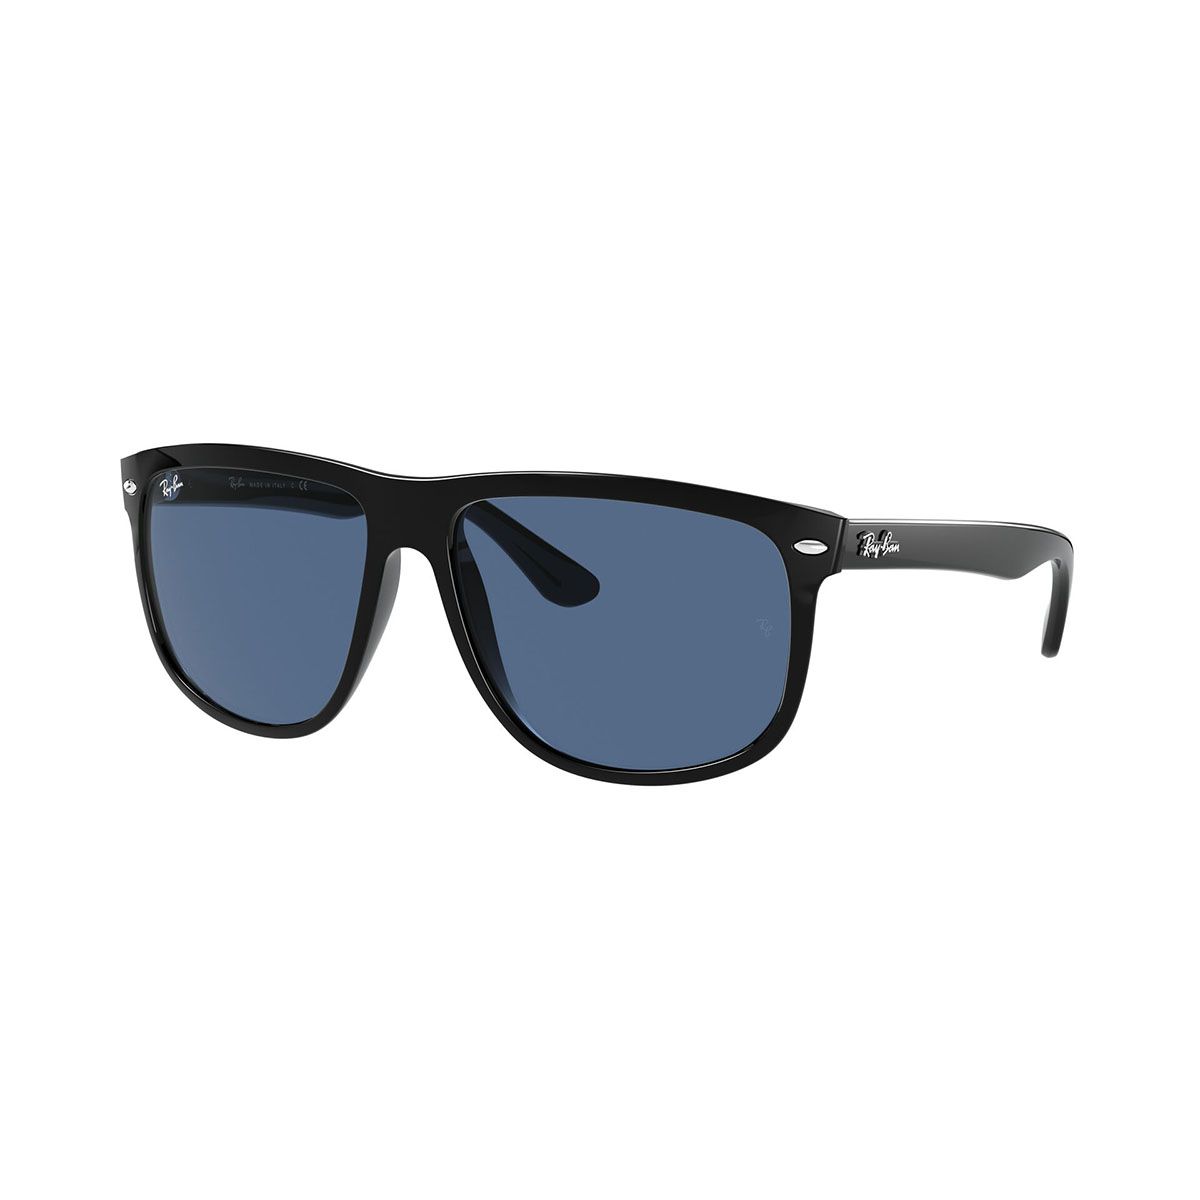 RB4147  - Sunglasses 601 80 - size 60